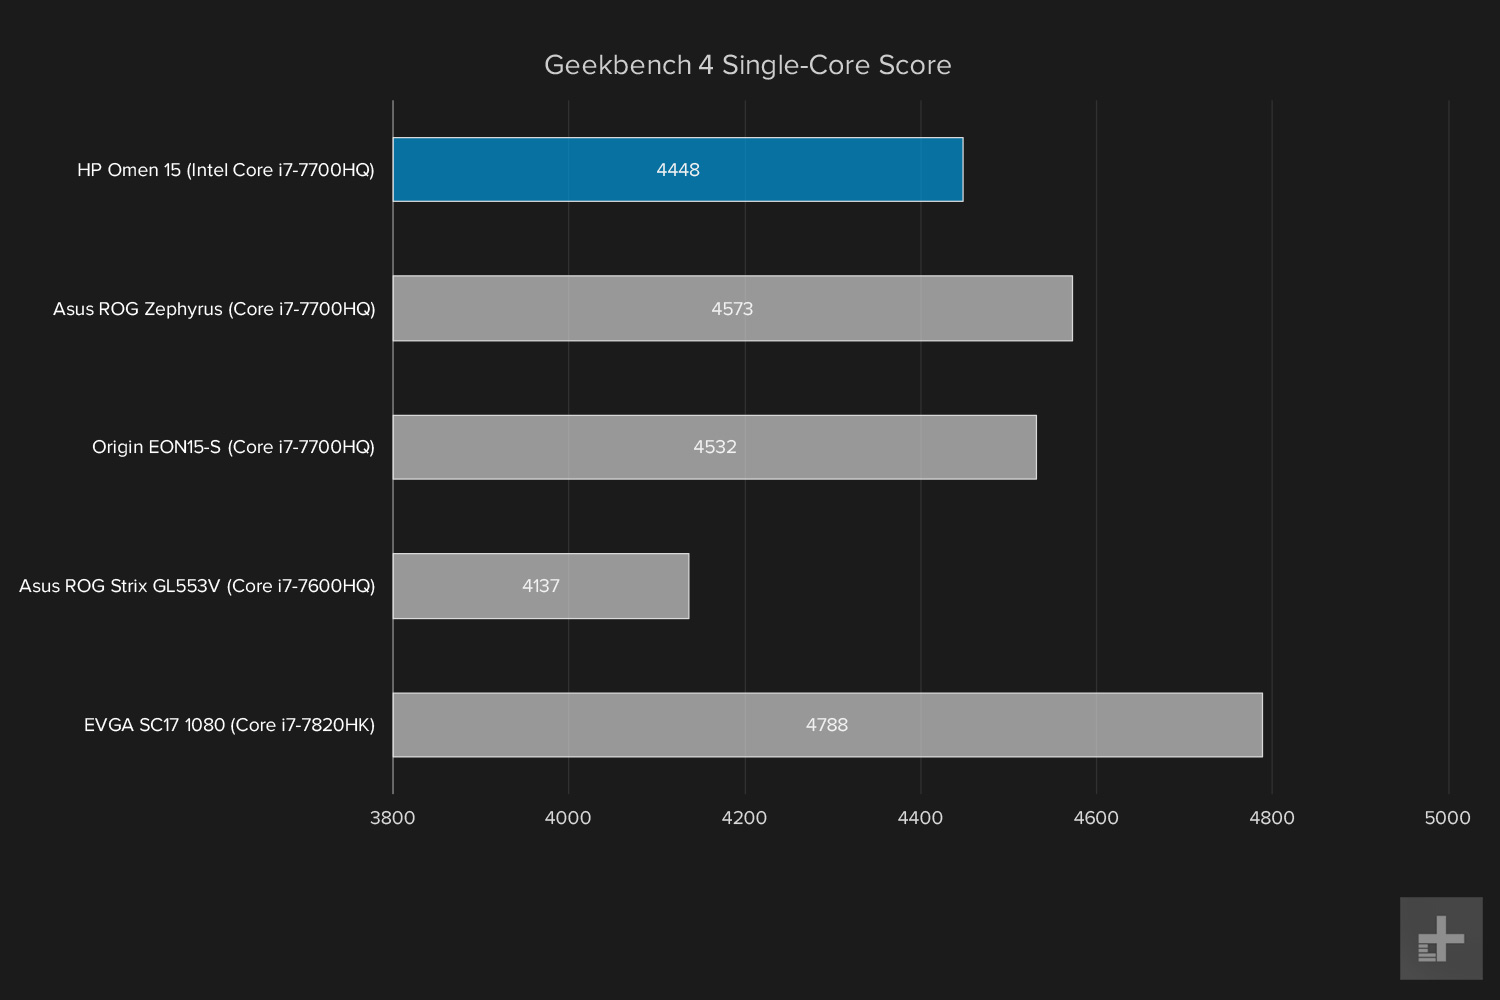 HP Omen benchmark graphs Geekbench Single